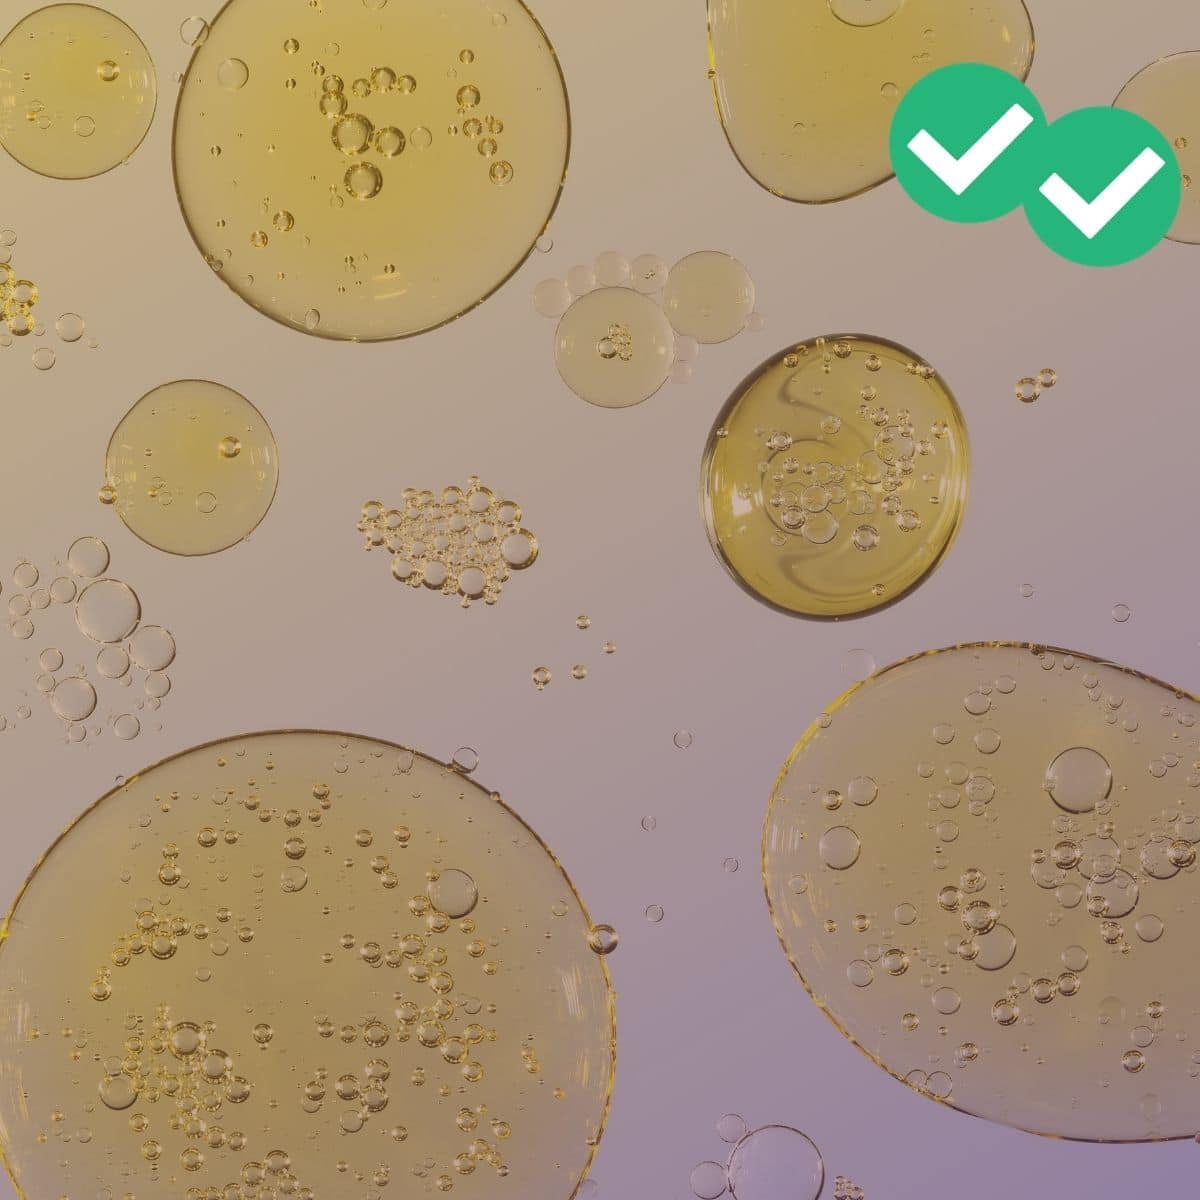 Oil bubbles representing MCAT lipids - image by Magoosh